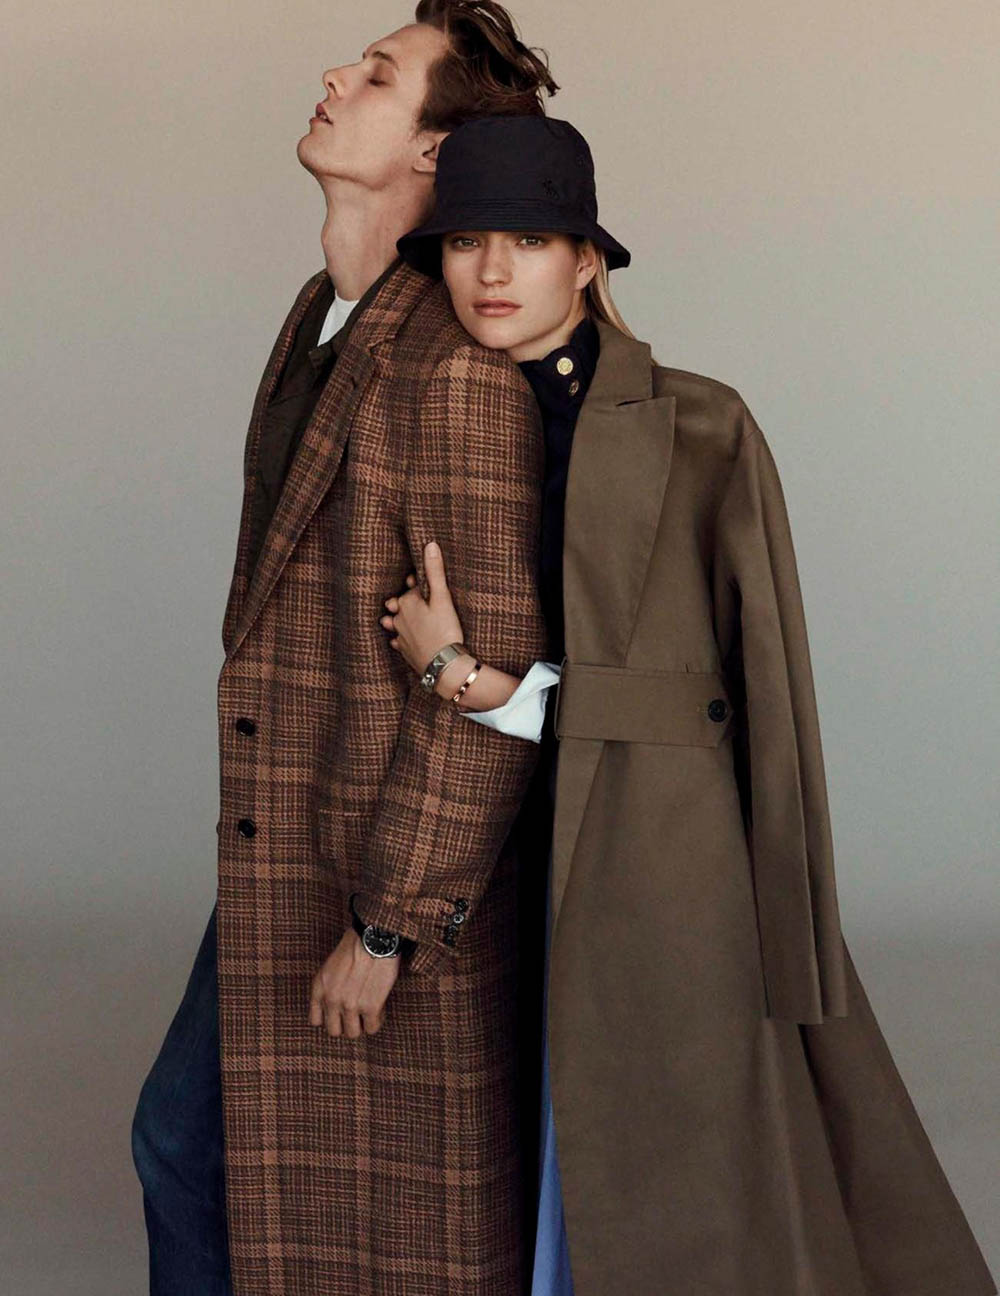 Sophia Ahrens and Felix Gesnouin by Alvaro Beamud for Vogue Spain February 2018